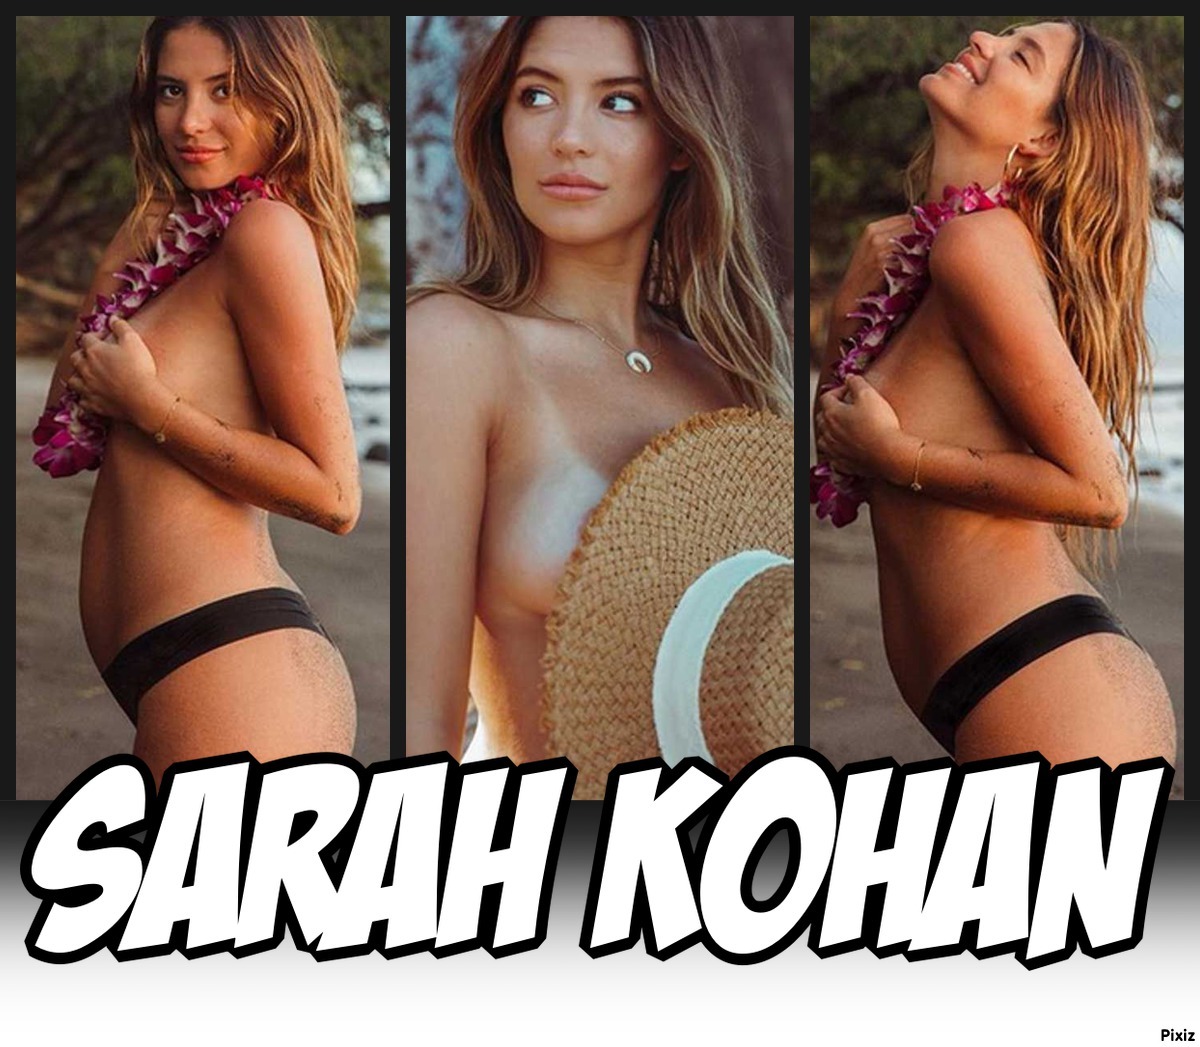 Sarah Kohan, novia de Chicarito Hernndez, posa embarazada en toples...